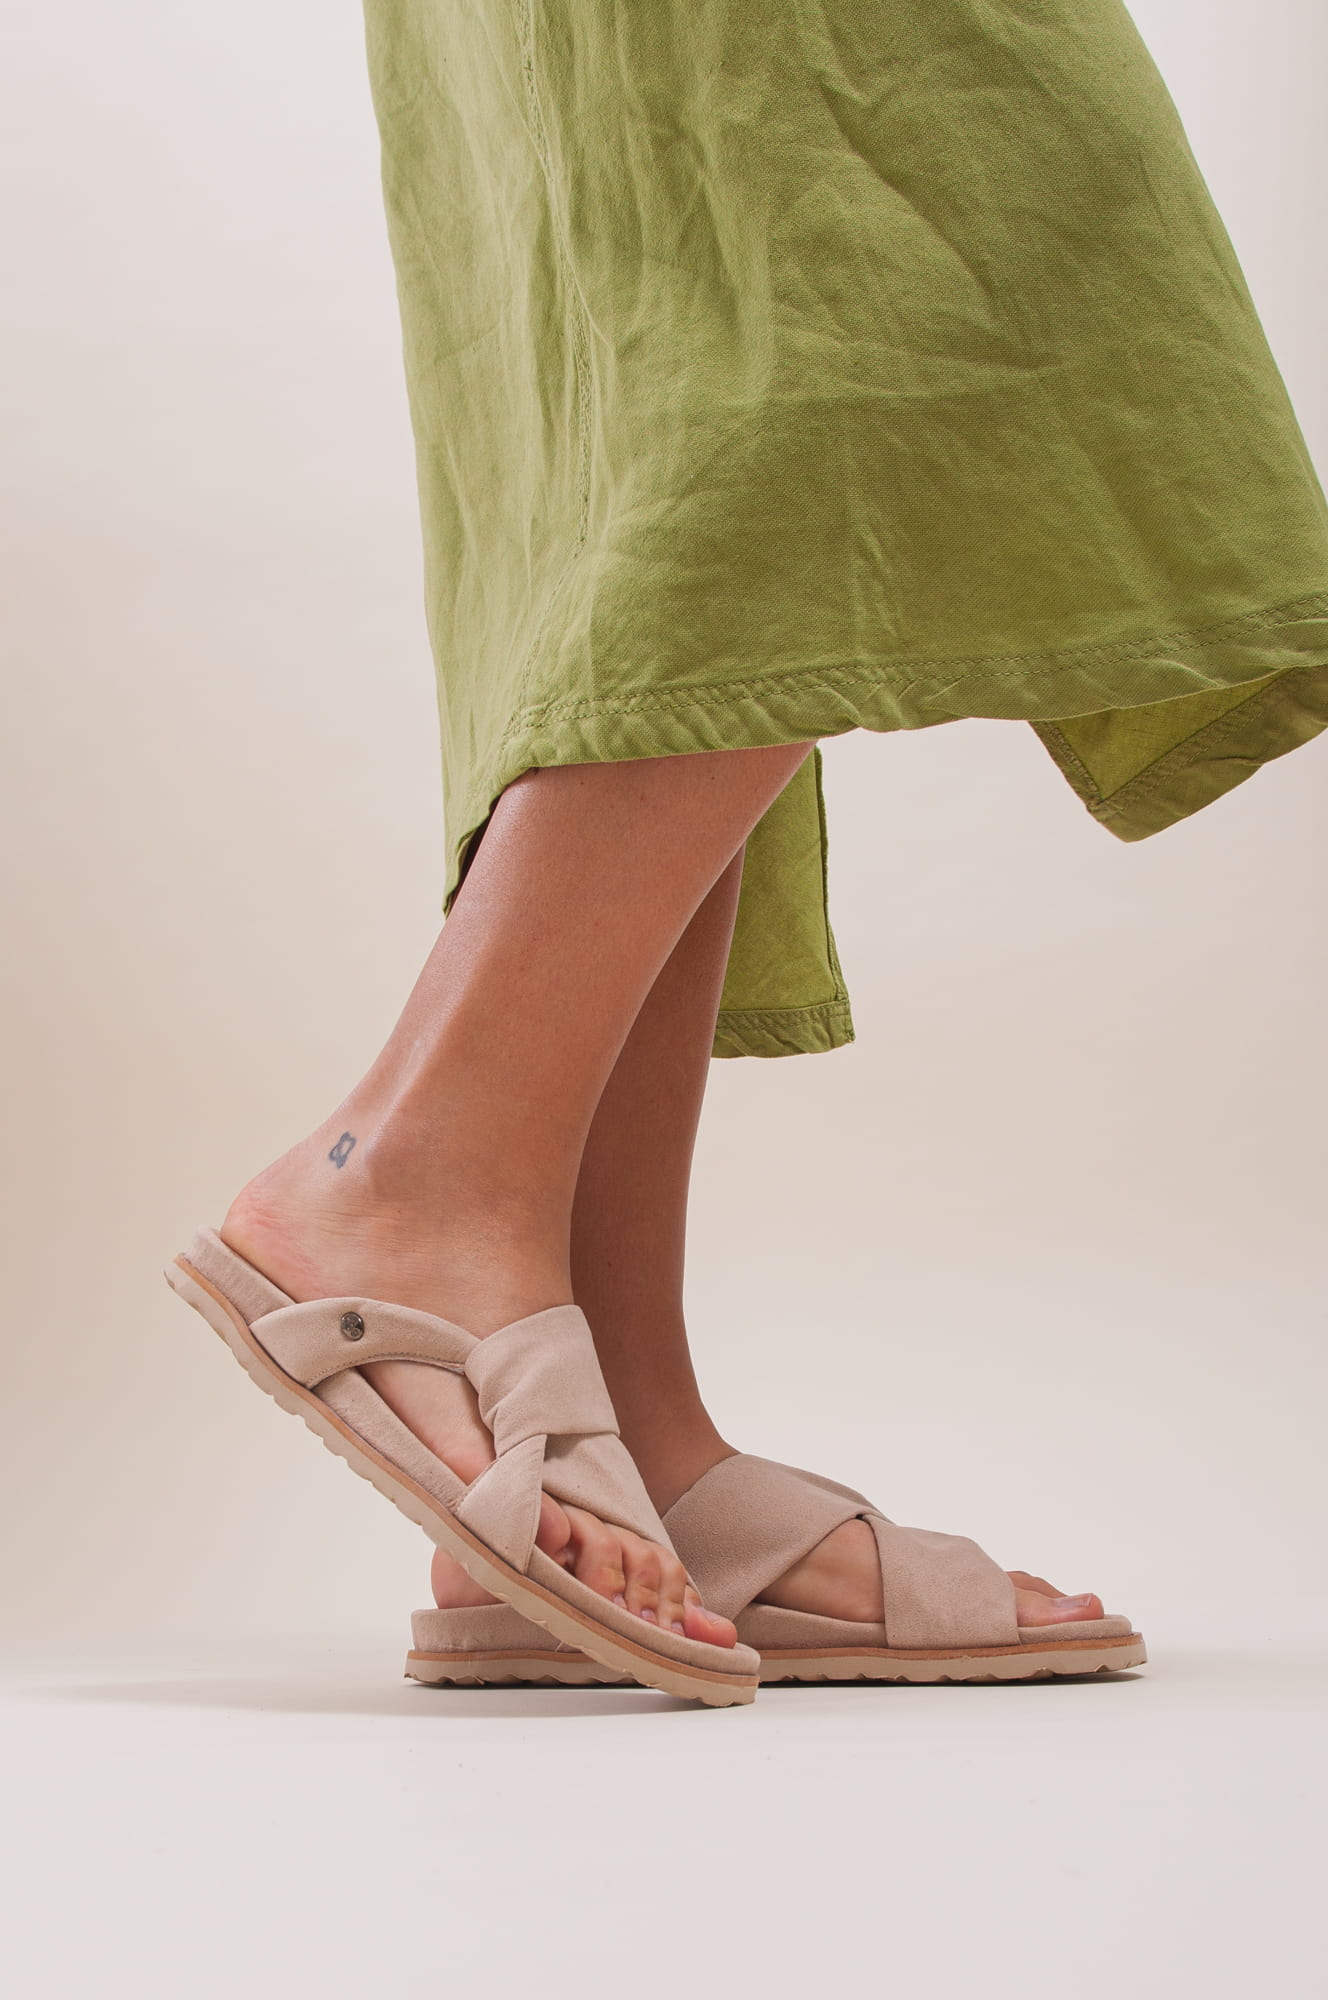 Sandalias planas de mujer cómodas.